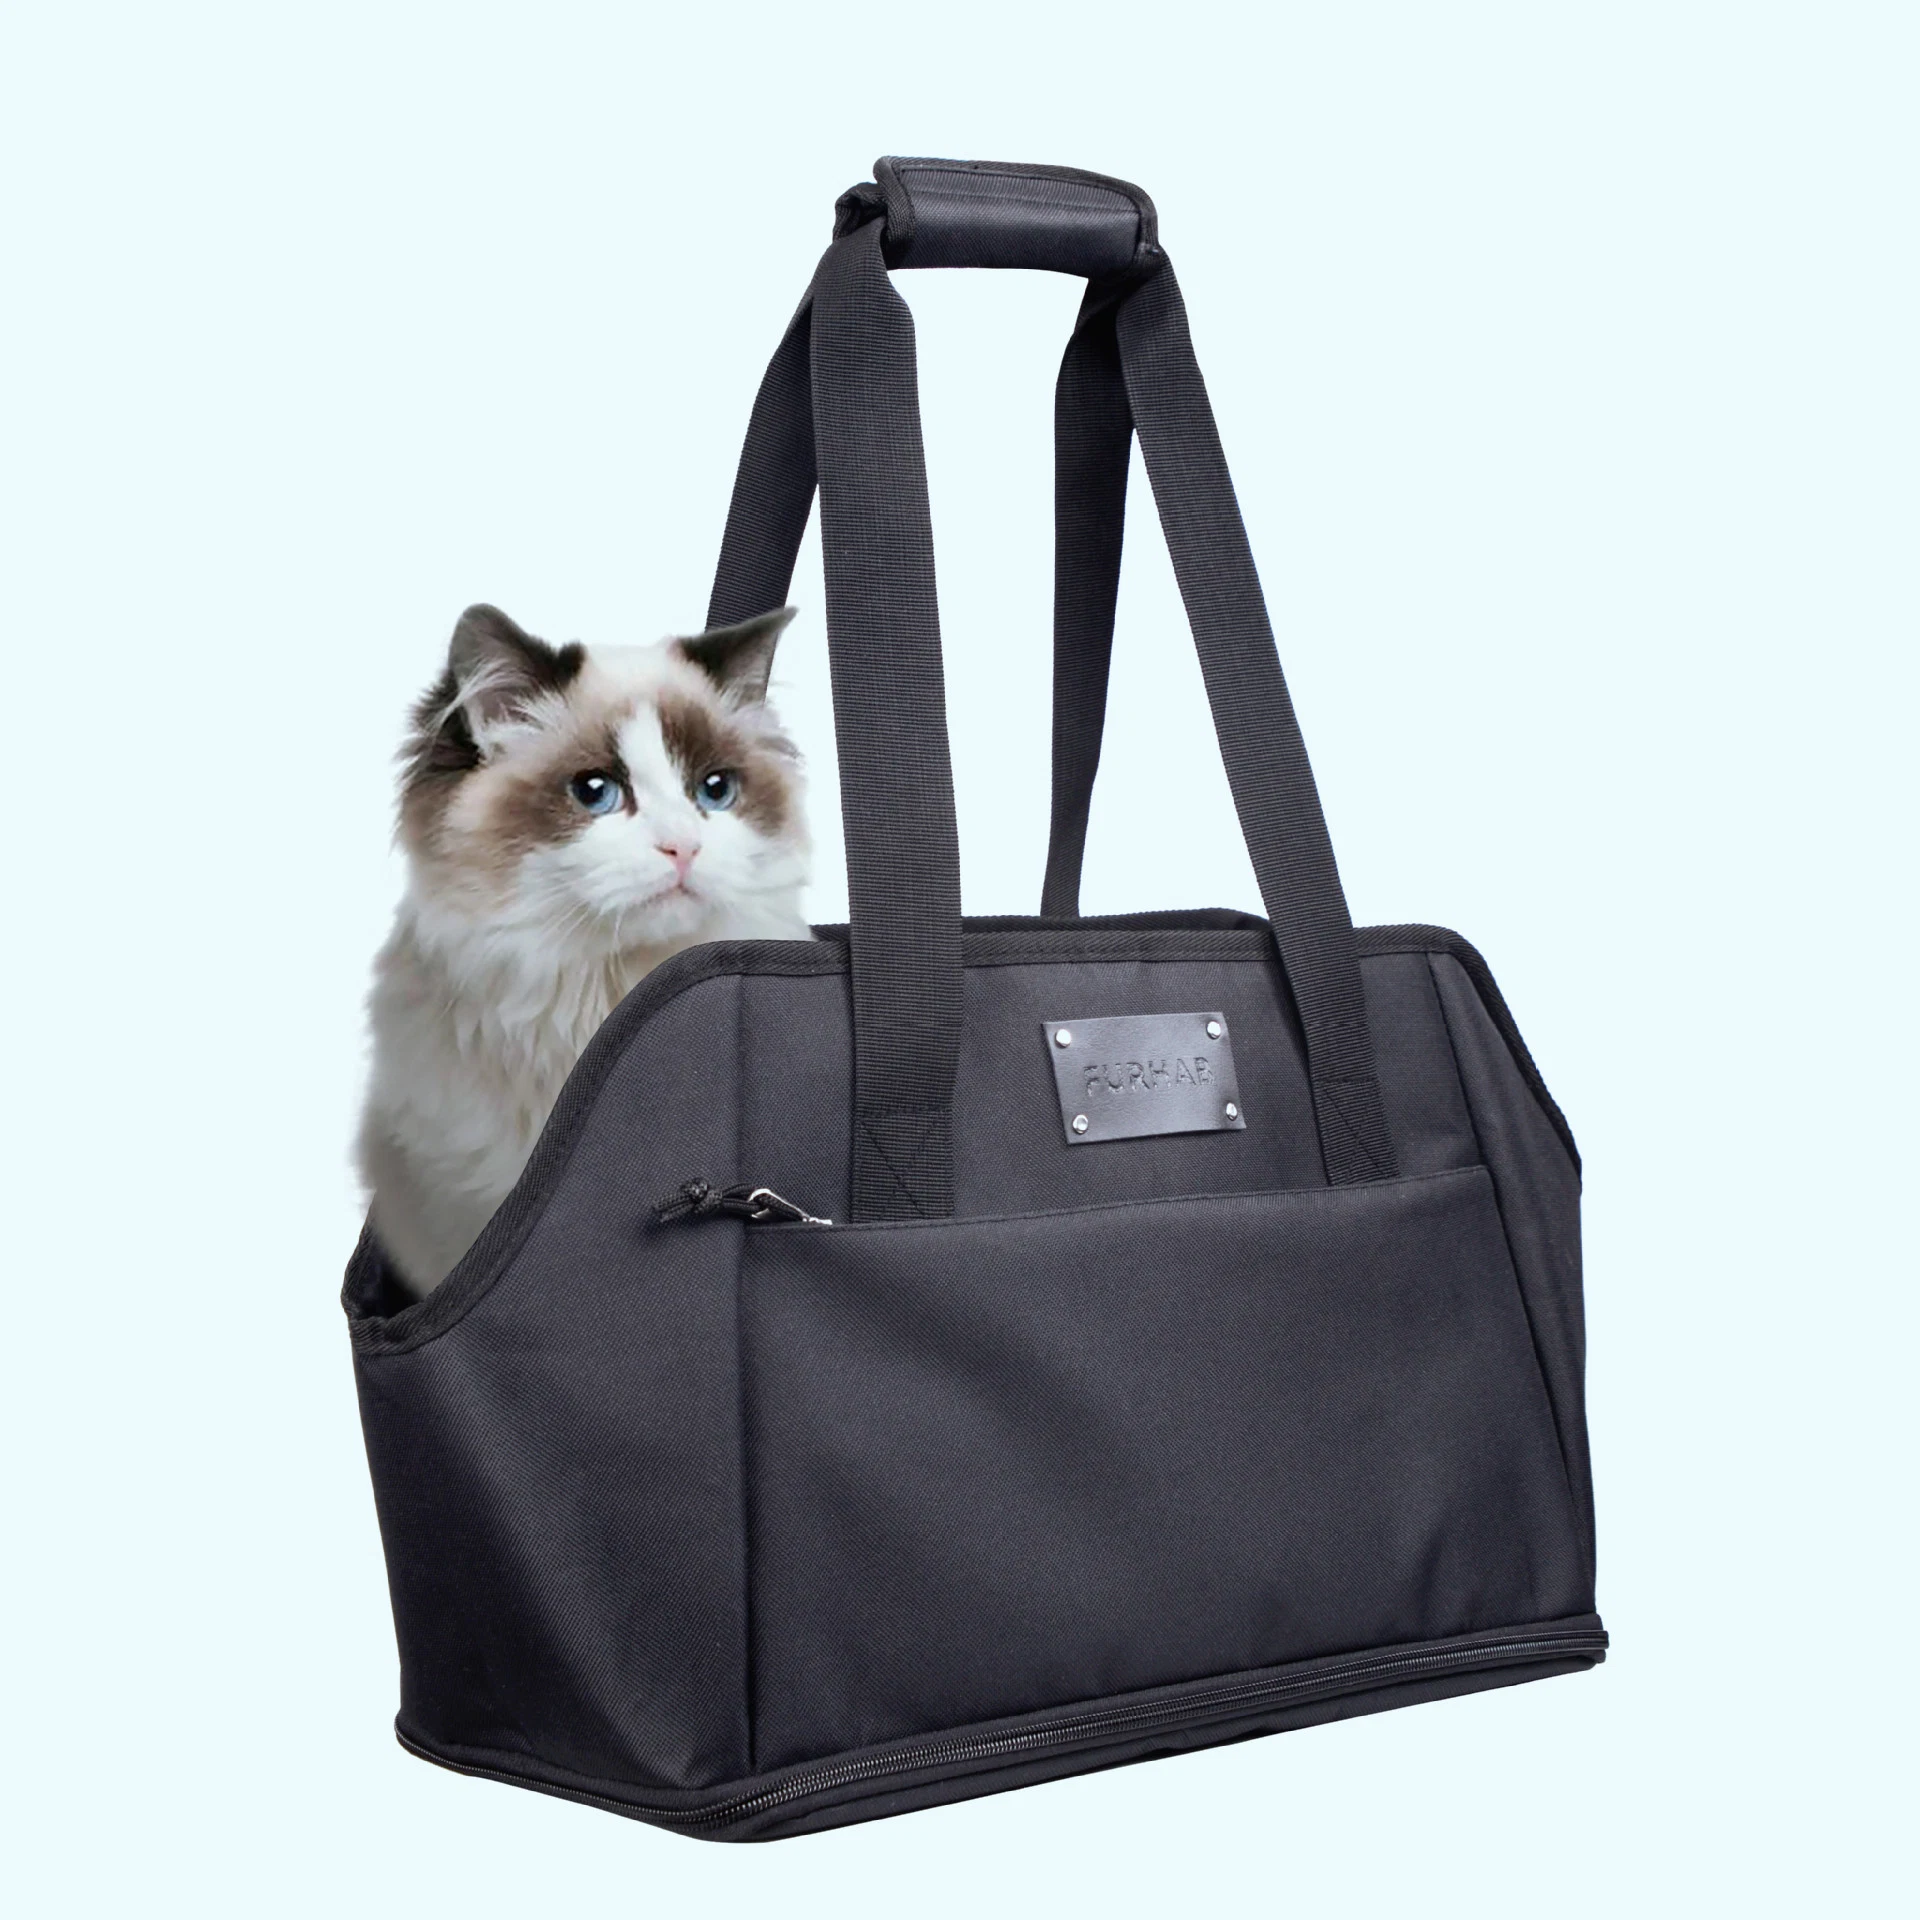 Portable Pet Carrier for Travel Pet Travel Bag